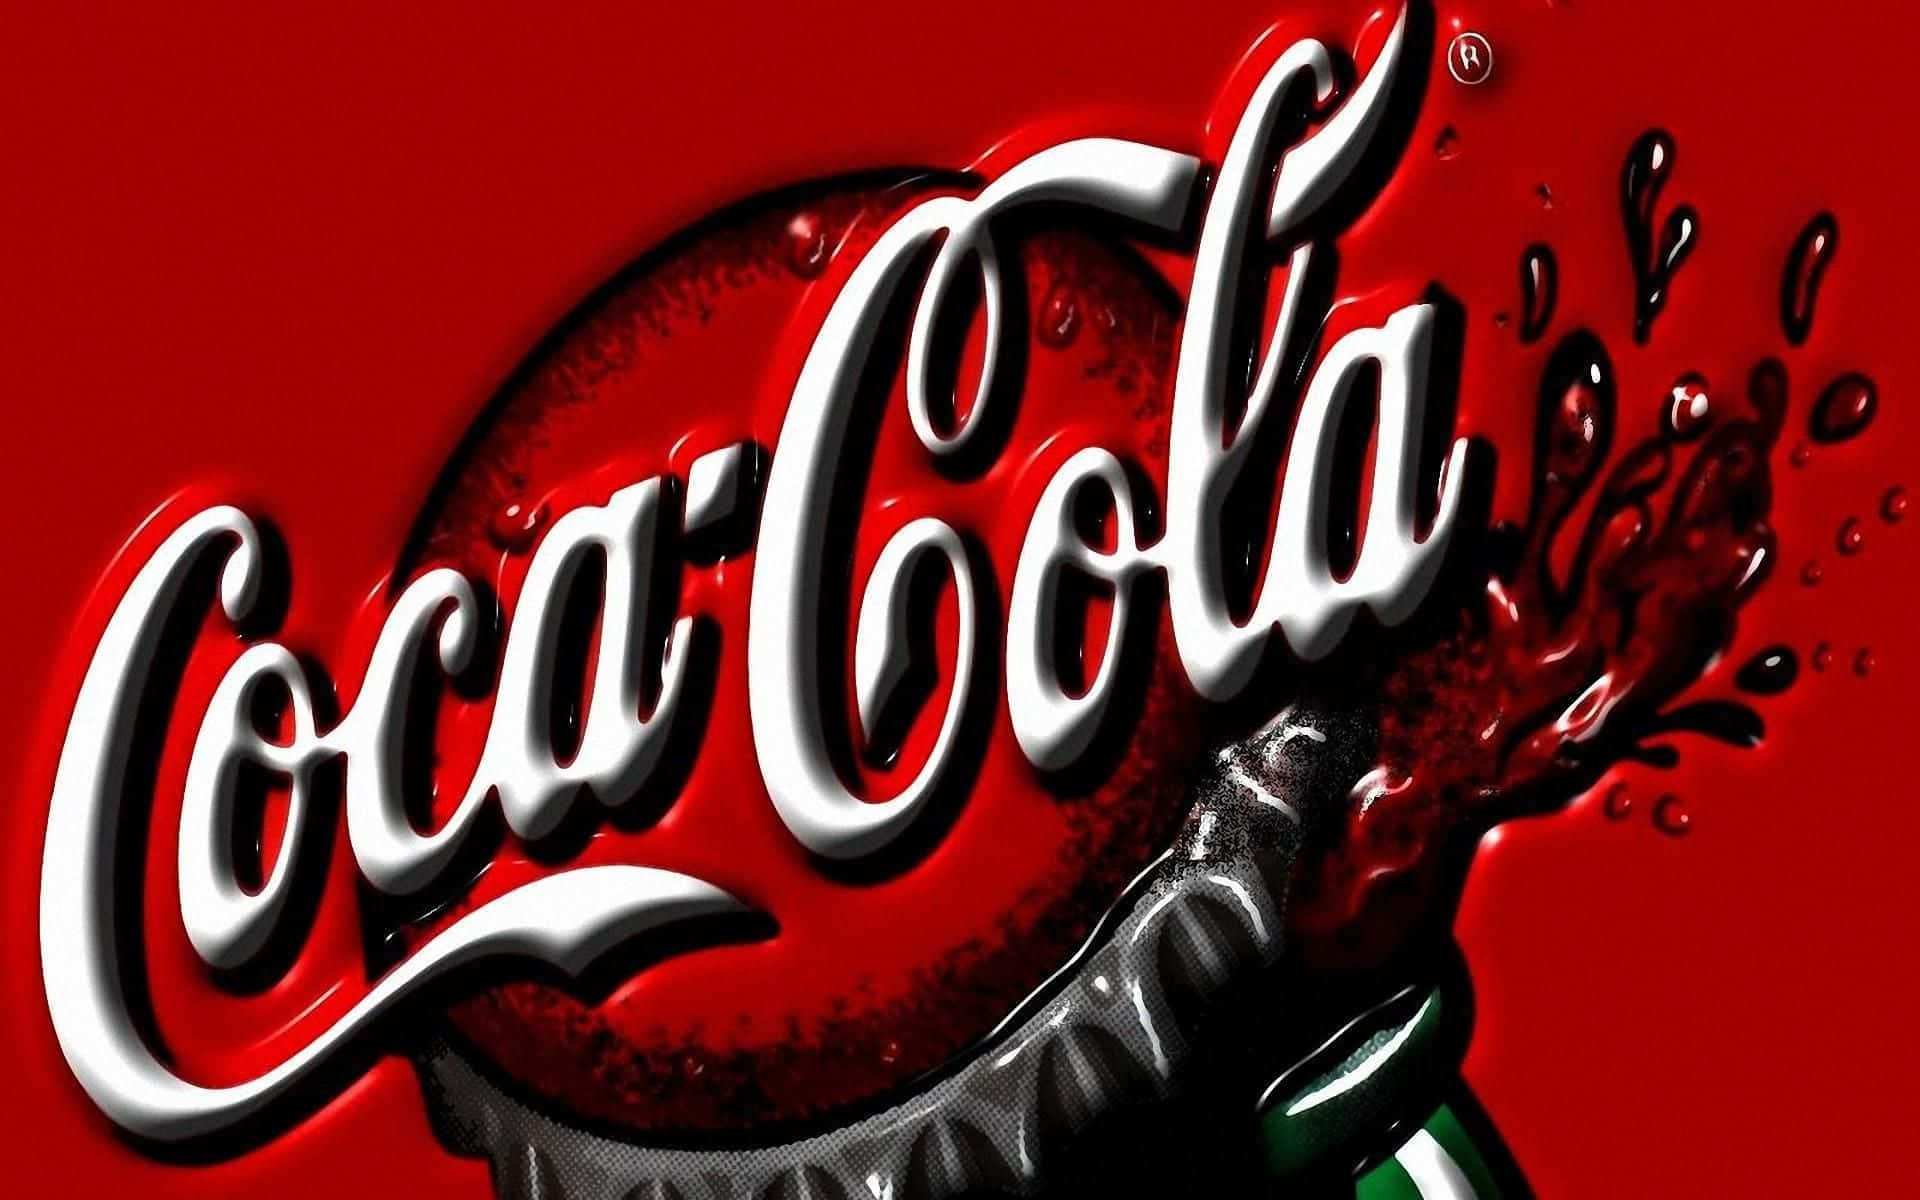 Logotipode Coca Cola Sobre Un Fondo Rojo